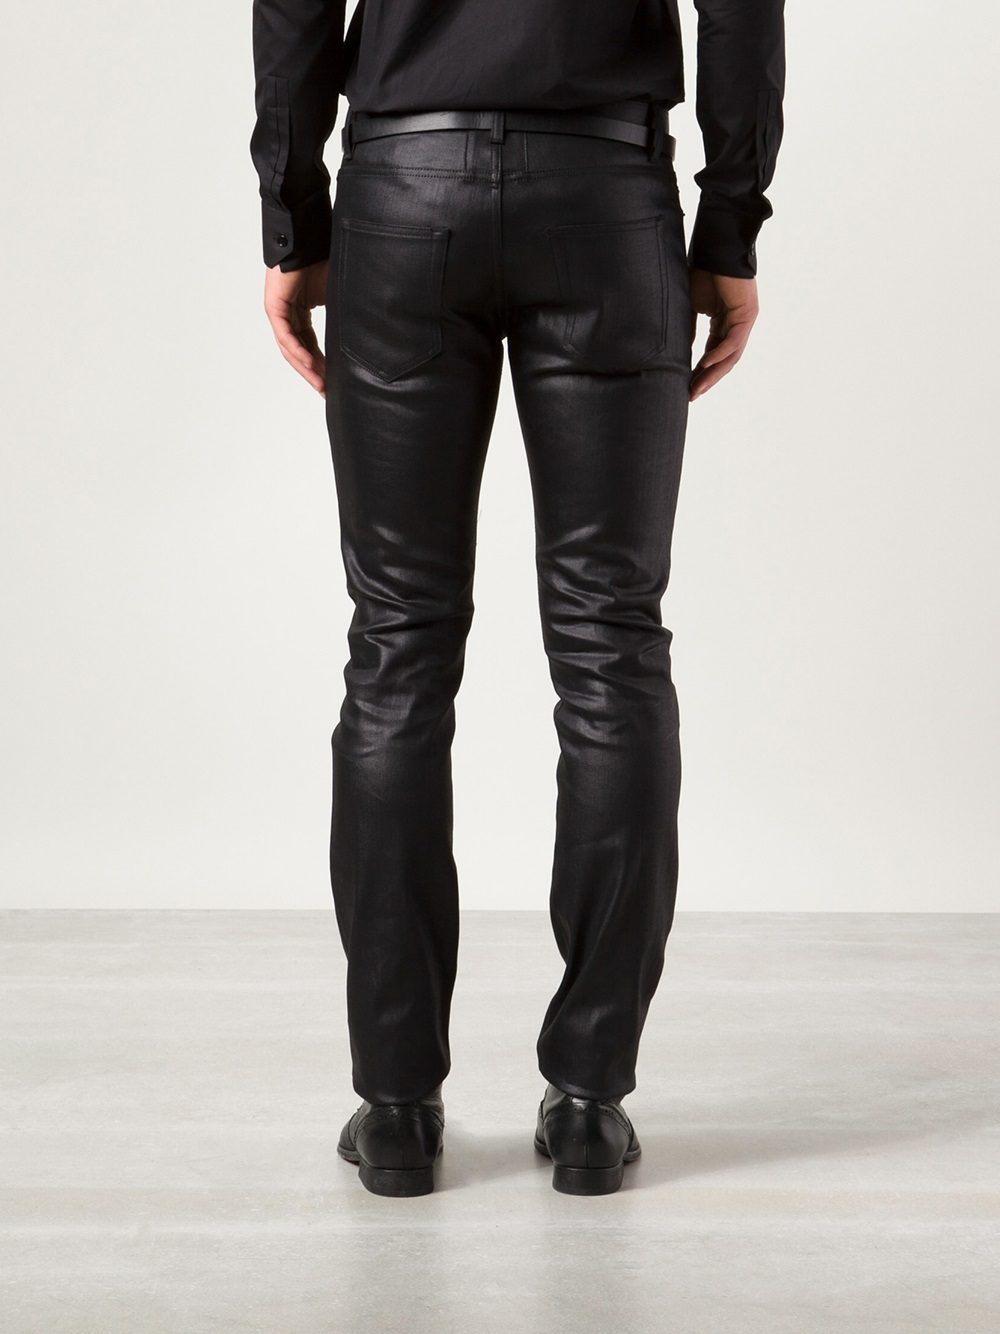 Saint Laurent Wax Denim Jeans in Black for Men - Lyst